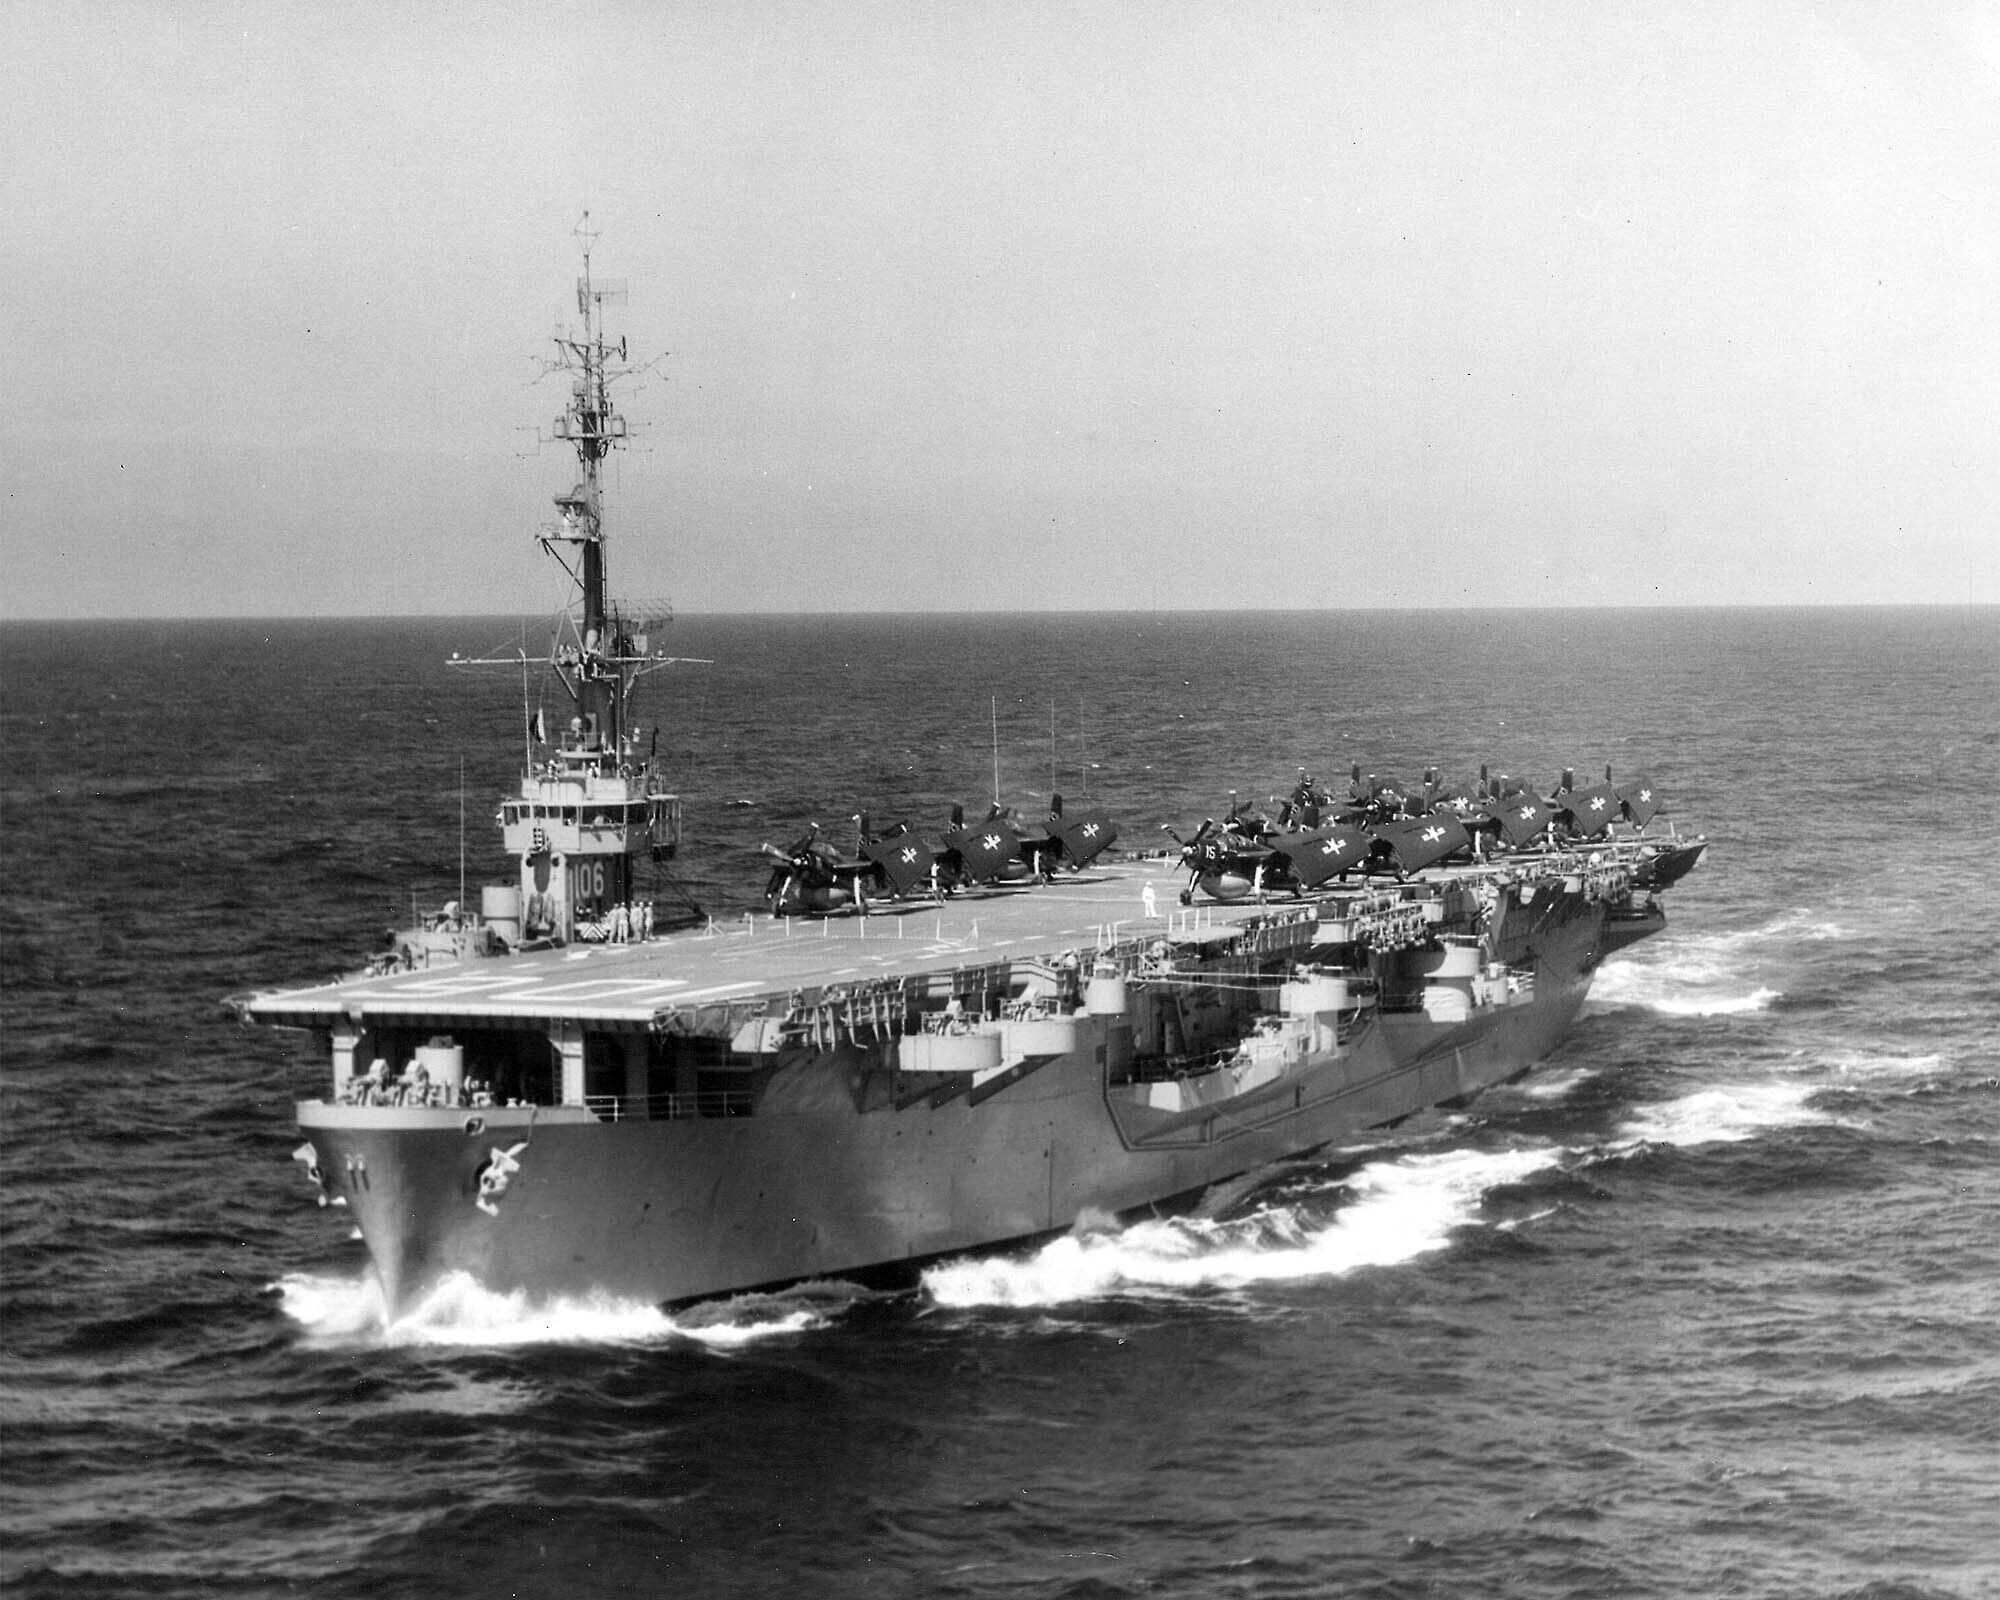 Primary Image of The USS Block Island (CVE-106)